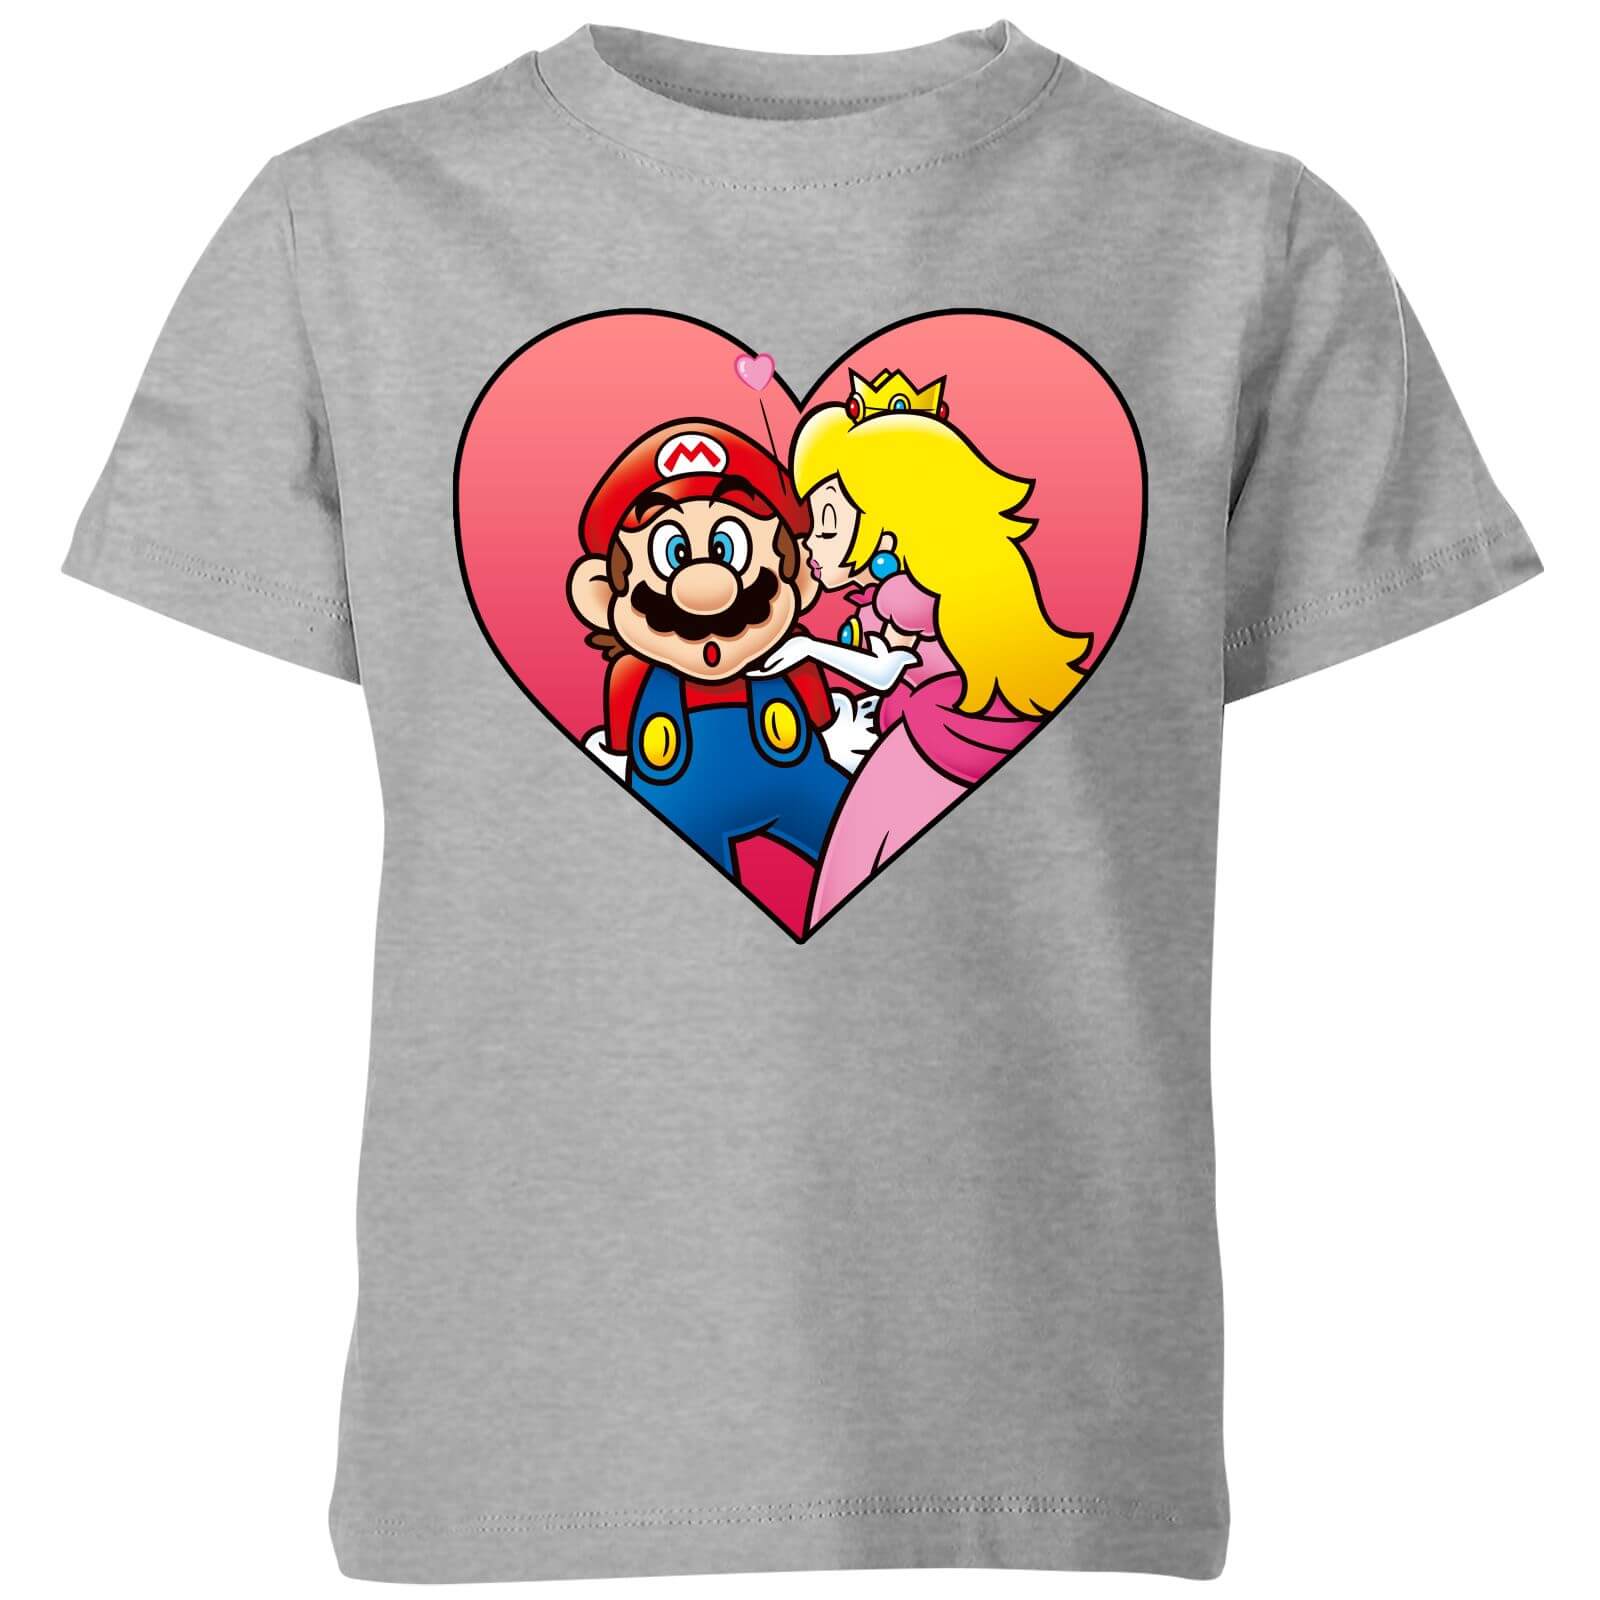 Nintendo Super Mario Peach Kiss Kid's T-Shirt - Grey - 9-10 Years - Grey